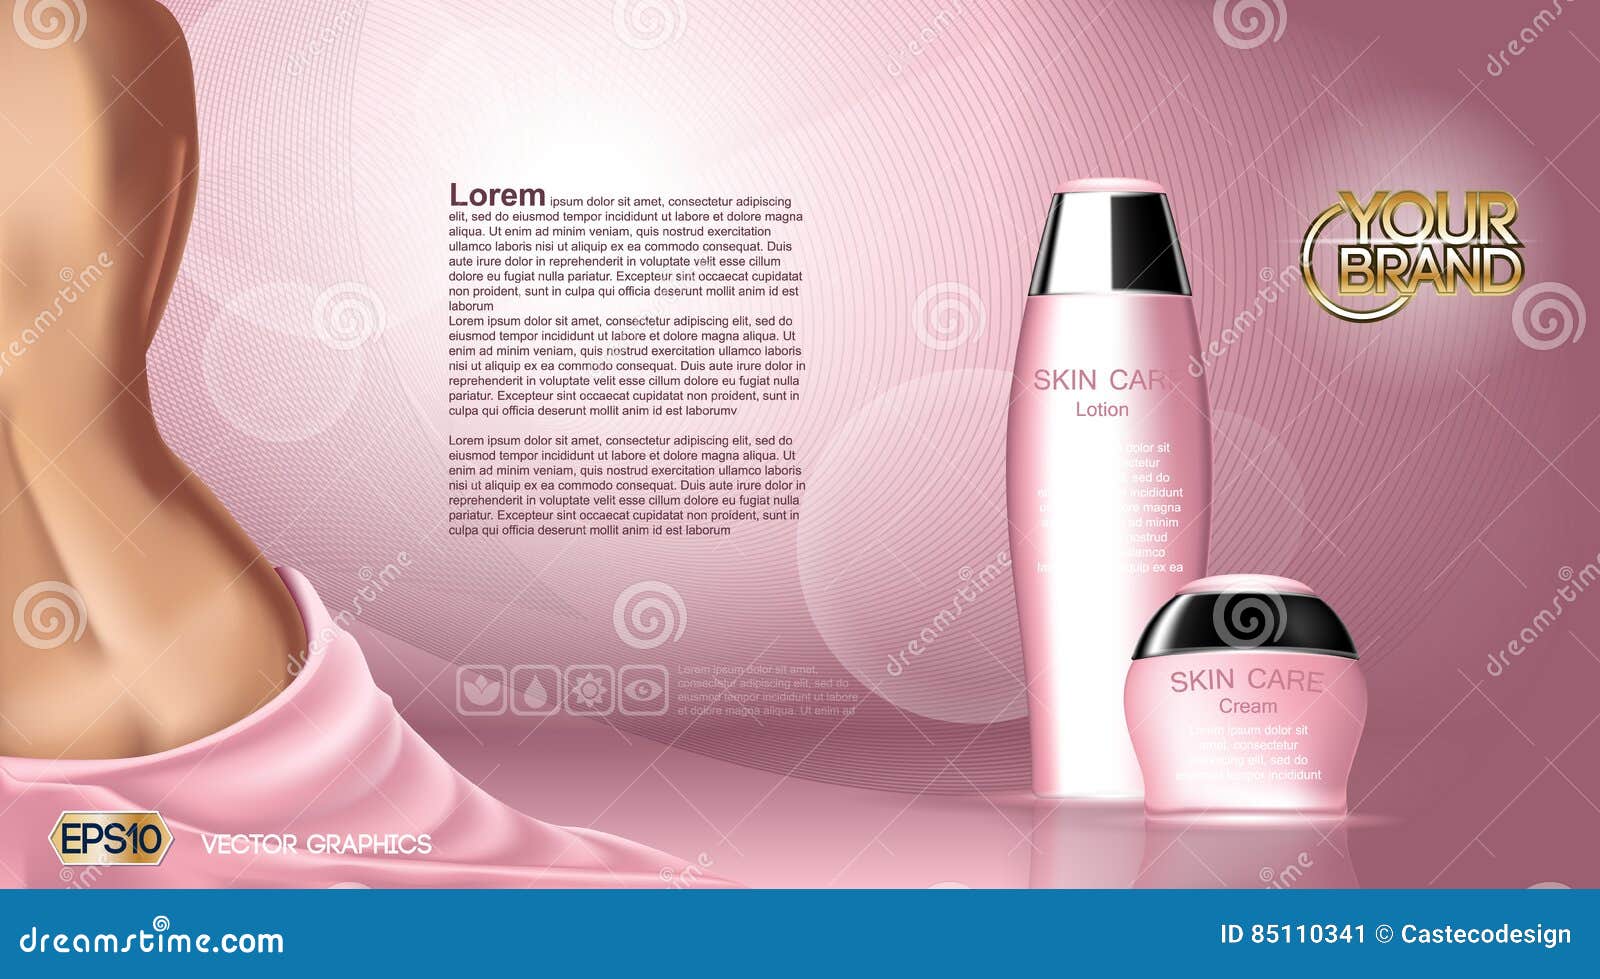 Body Cream Cosmetic Ads Templa   te Vector Illustration 